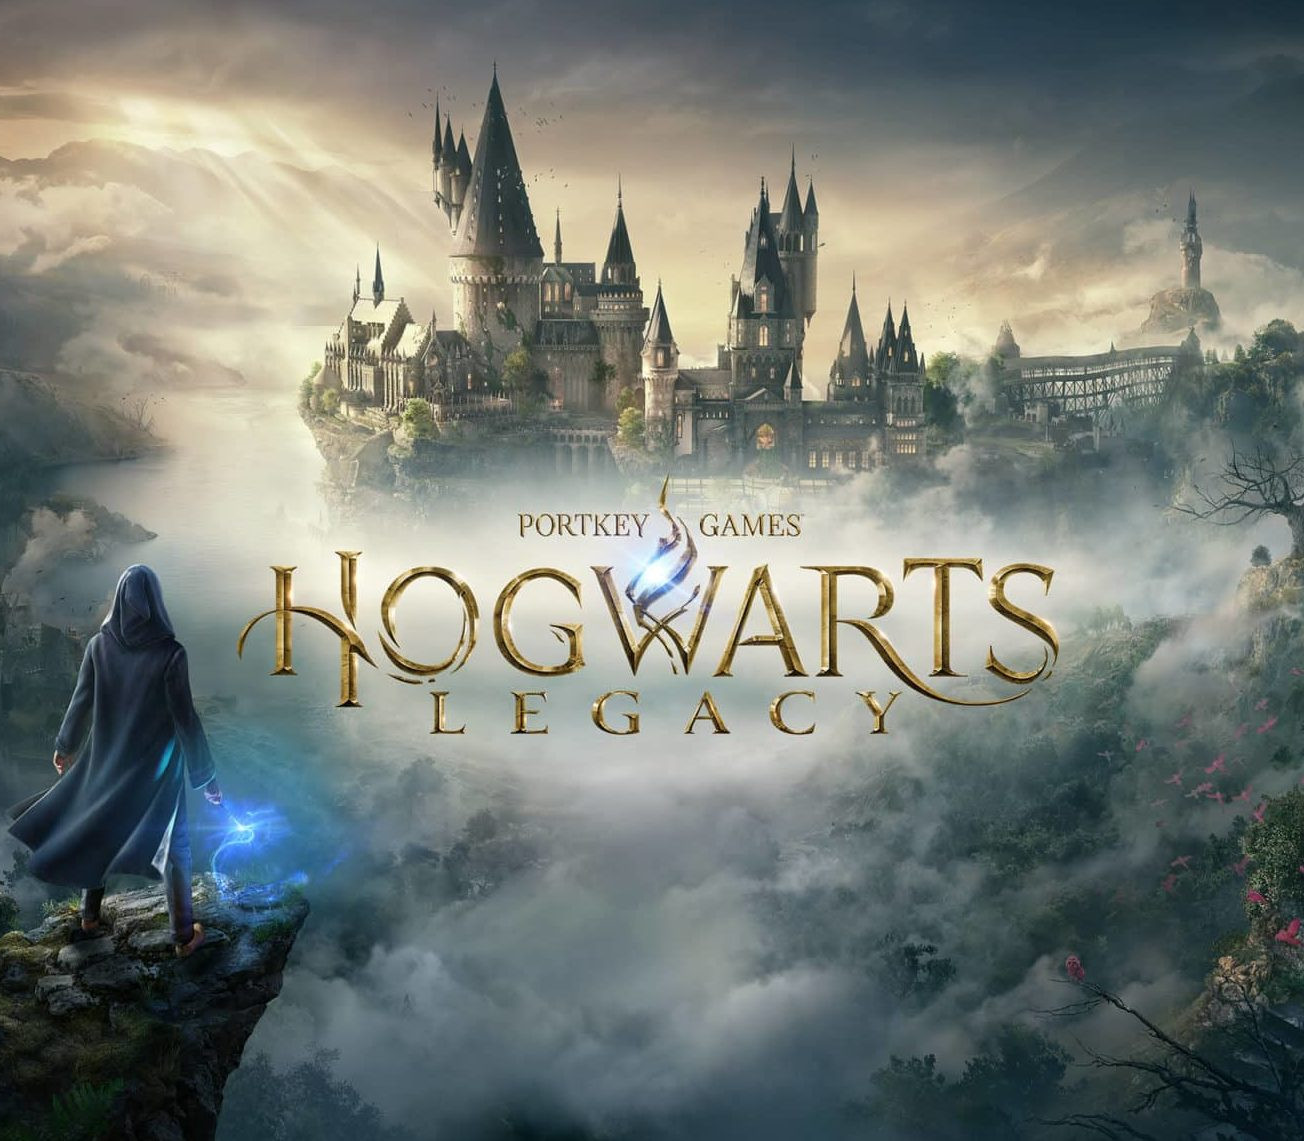 Hogwarts Legacy Steam Key for PC - Buy now